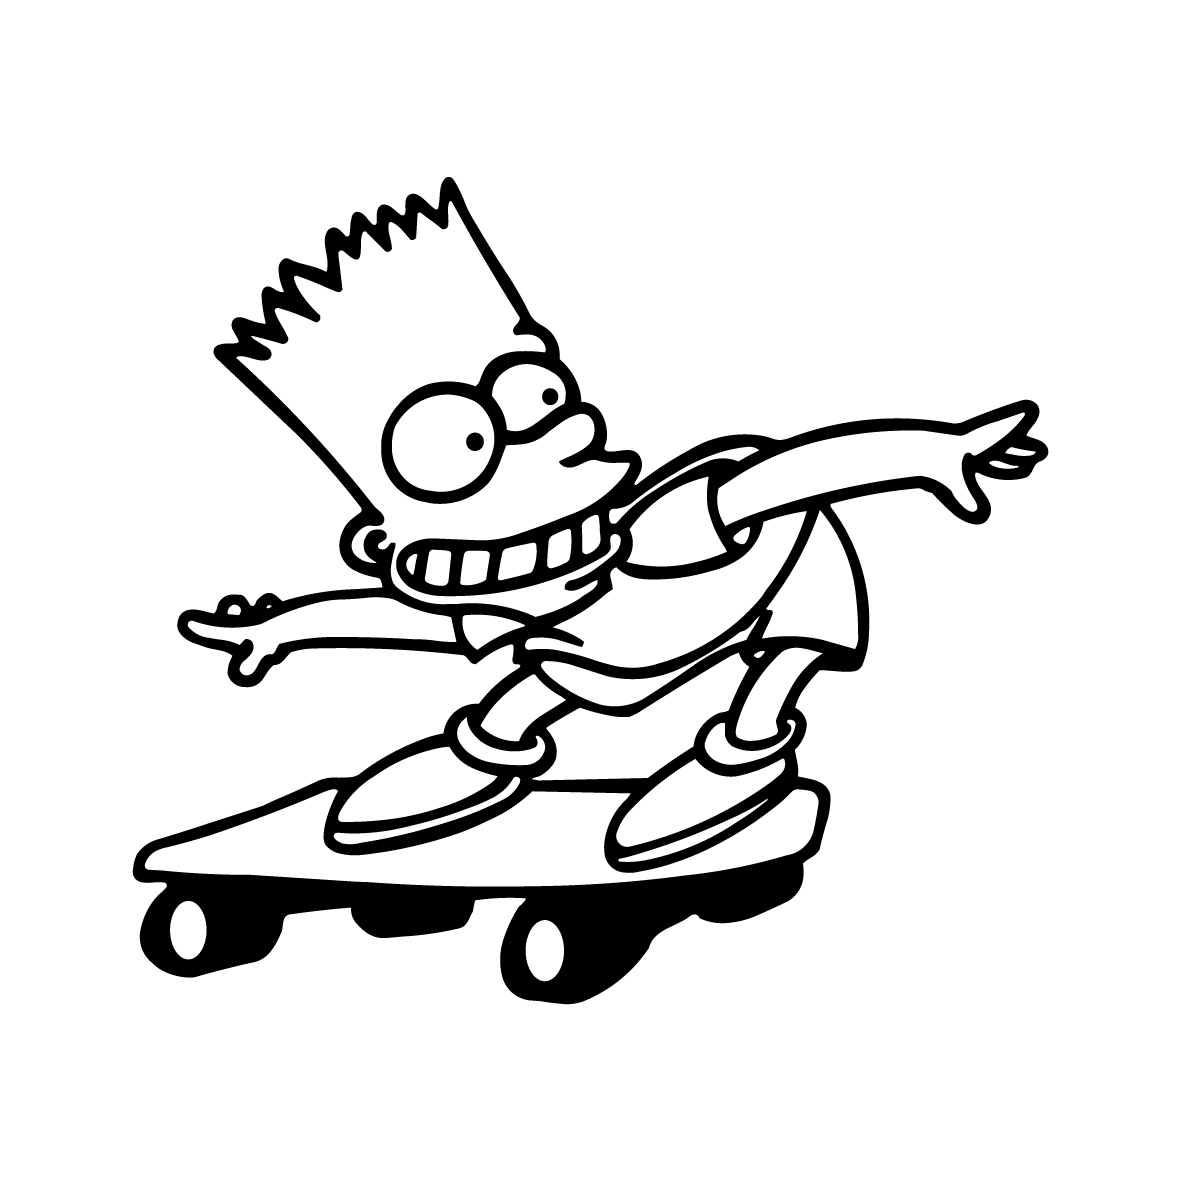 Рисунок барт симпсон на скейте